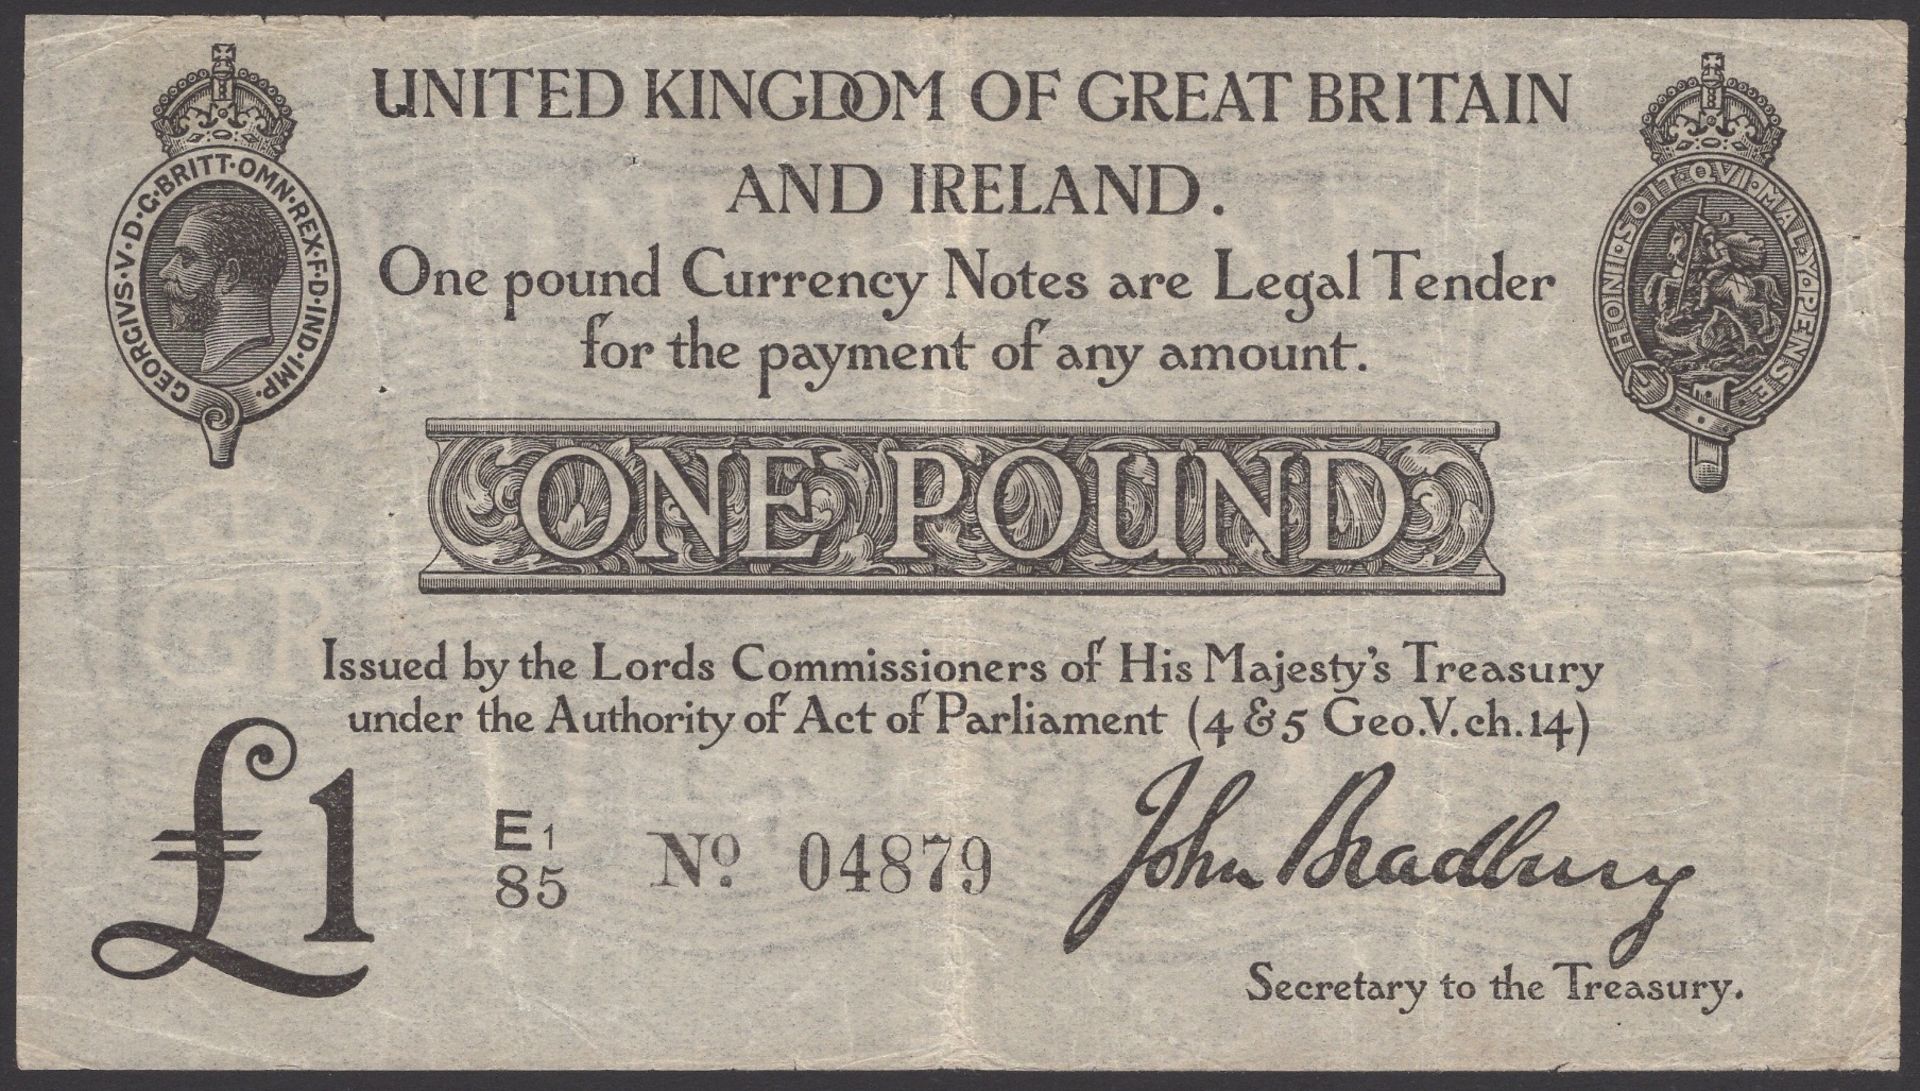 Treasury Series, John Bradbury, Â£1, 23 October 1914, serial number E1/85 04879, good fine E...